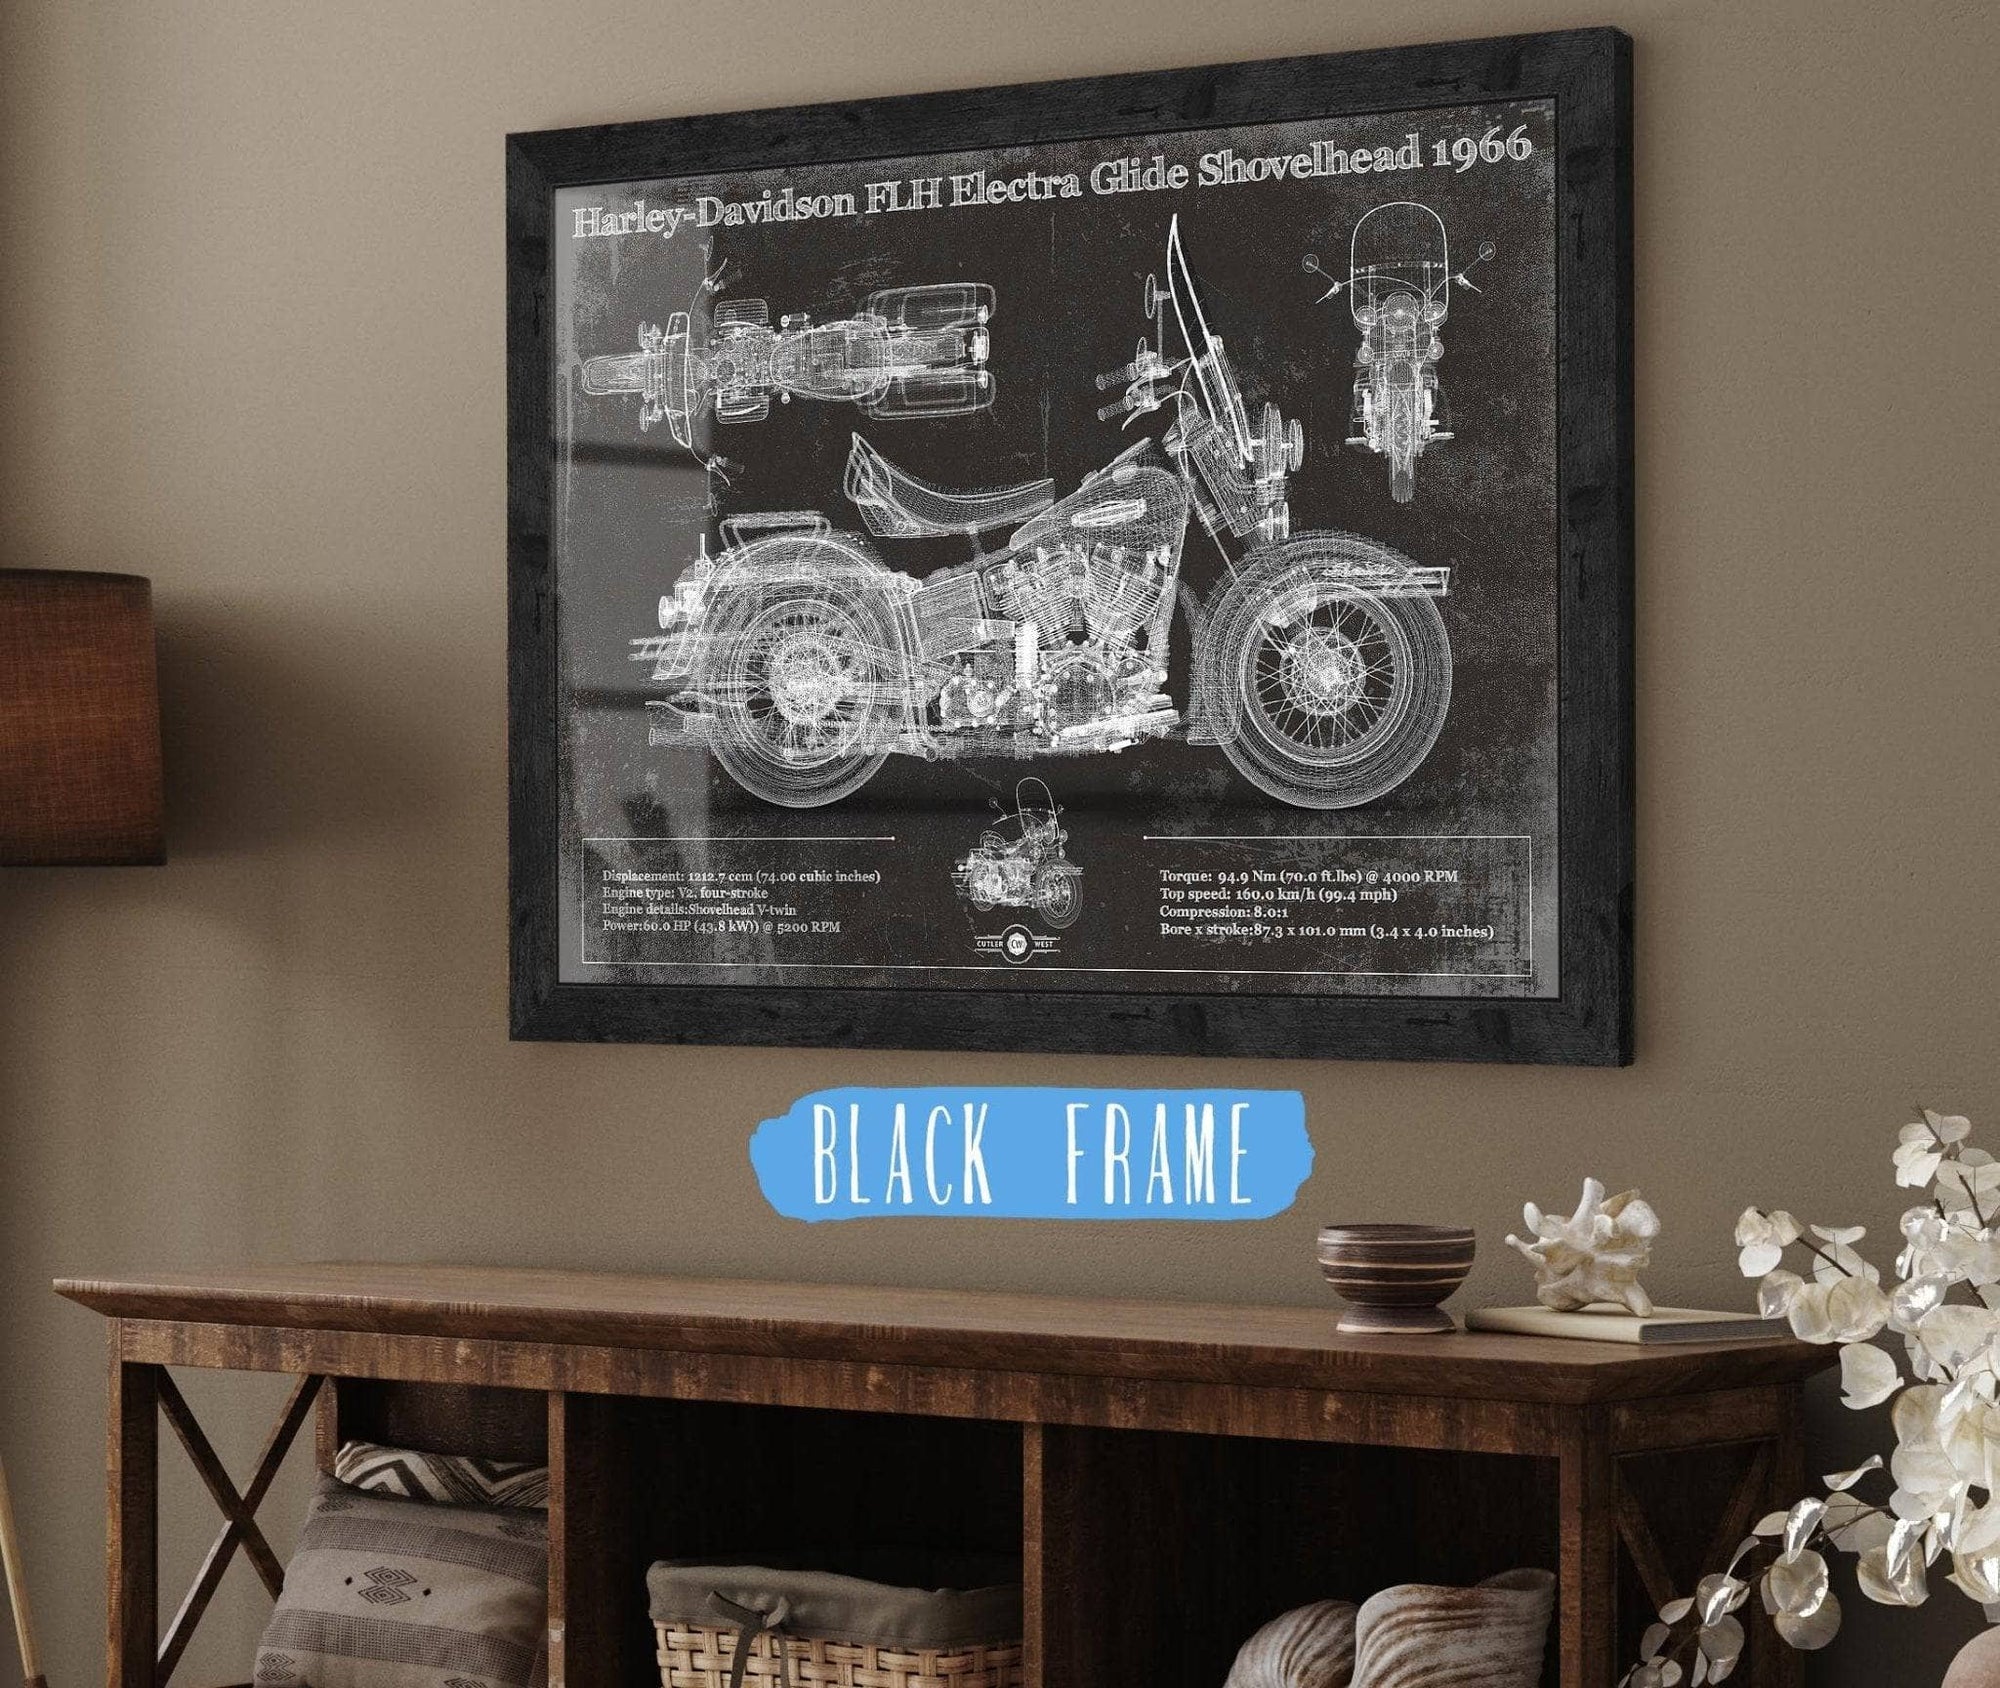 Cutler West 14" x 11" / Black Frame Harley-Davidson FLH Electra Glide Shovelhead 1966 Motorcycle Patent Print 845000199_62598